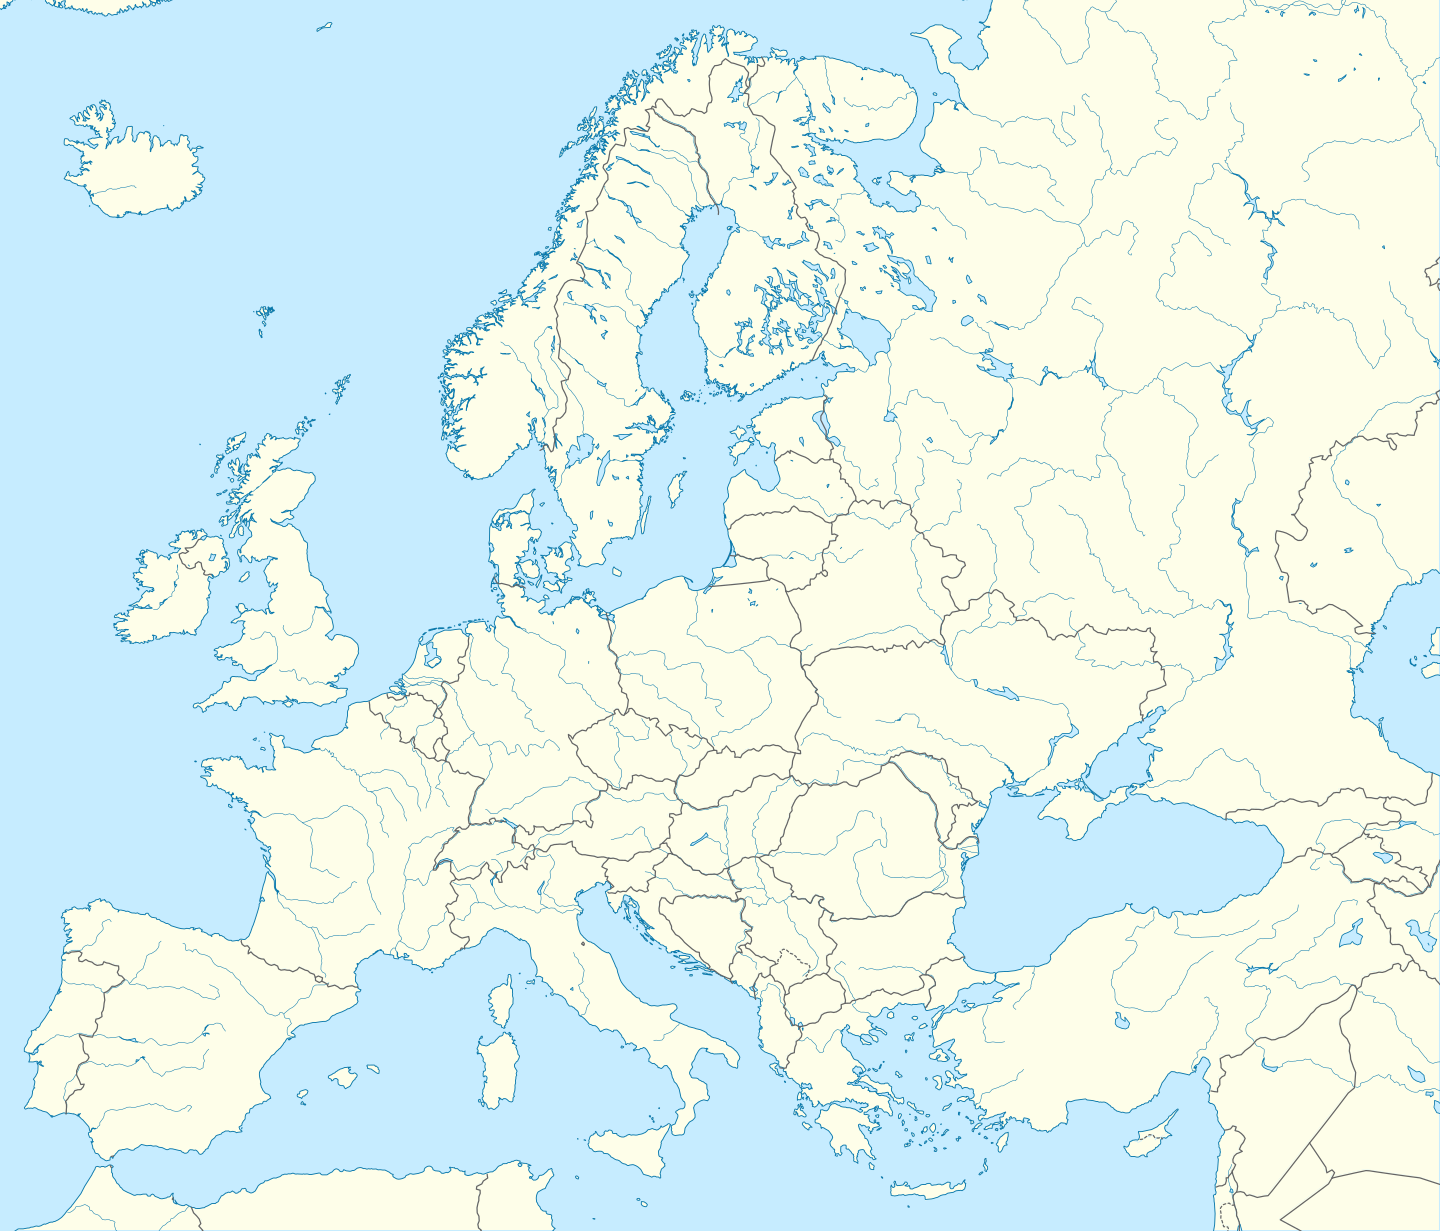 Europe laea location map.svg